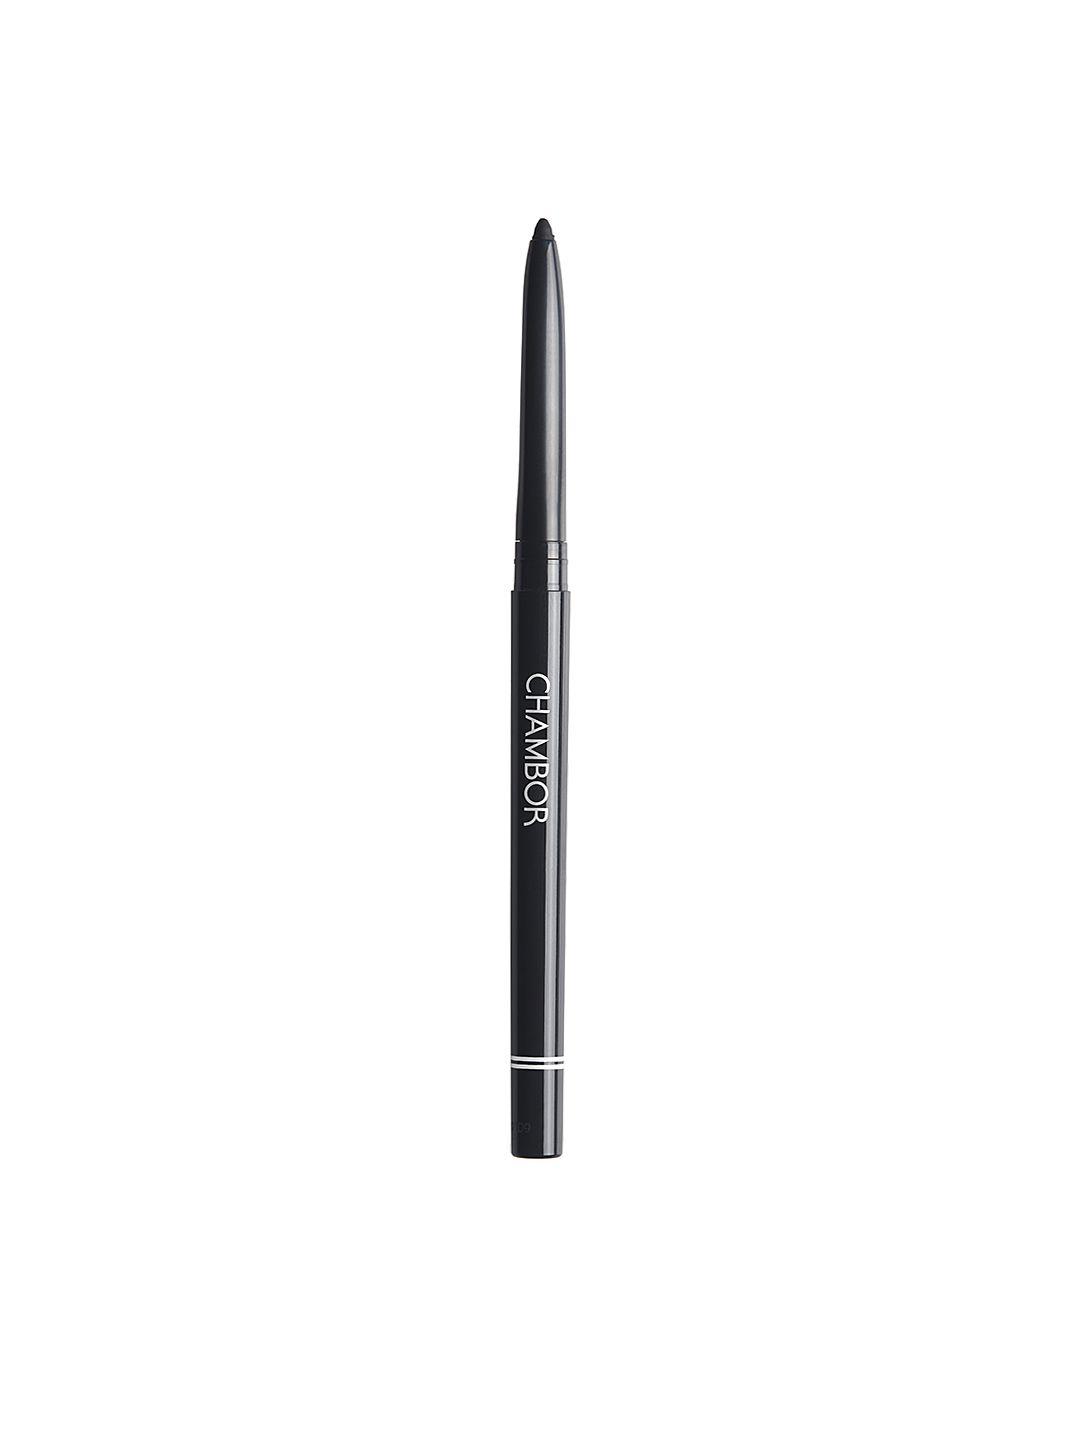 chambor intense definition gel eyeliner pencil - blackest black 101 0.25 g